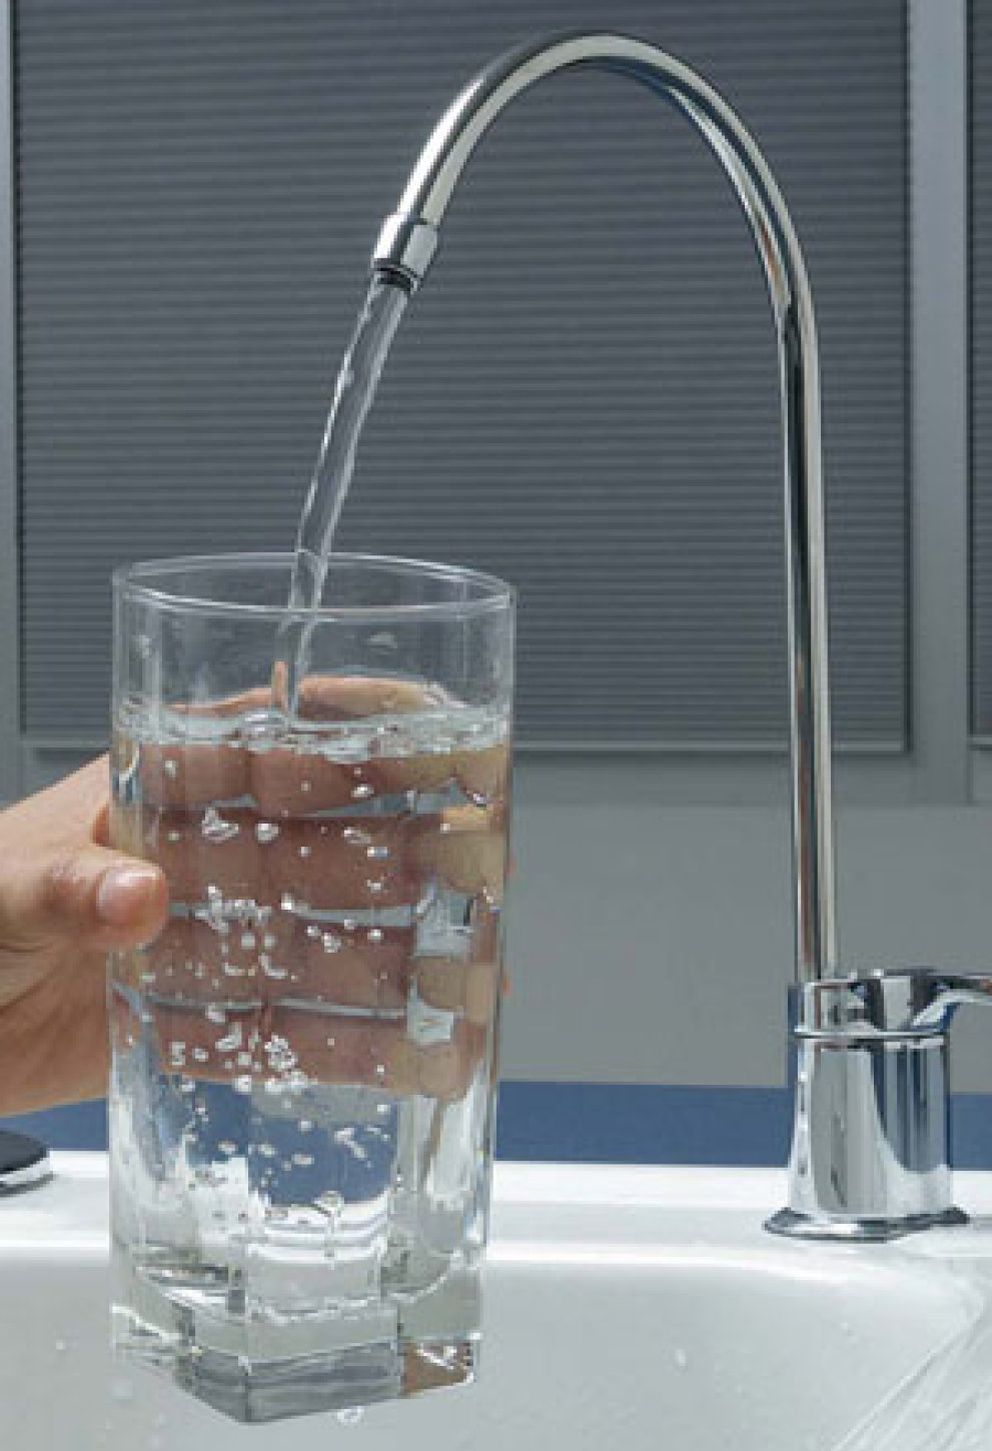 Foto: Beber mucha agua no es tan beneficioso